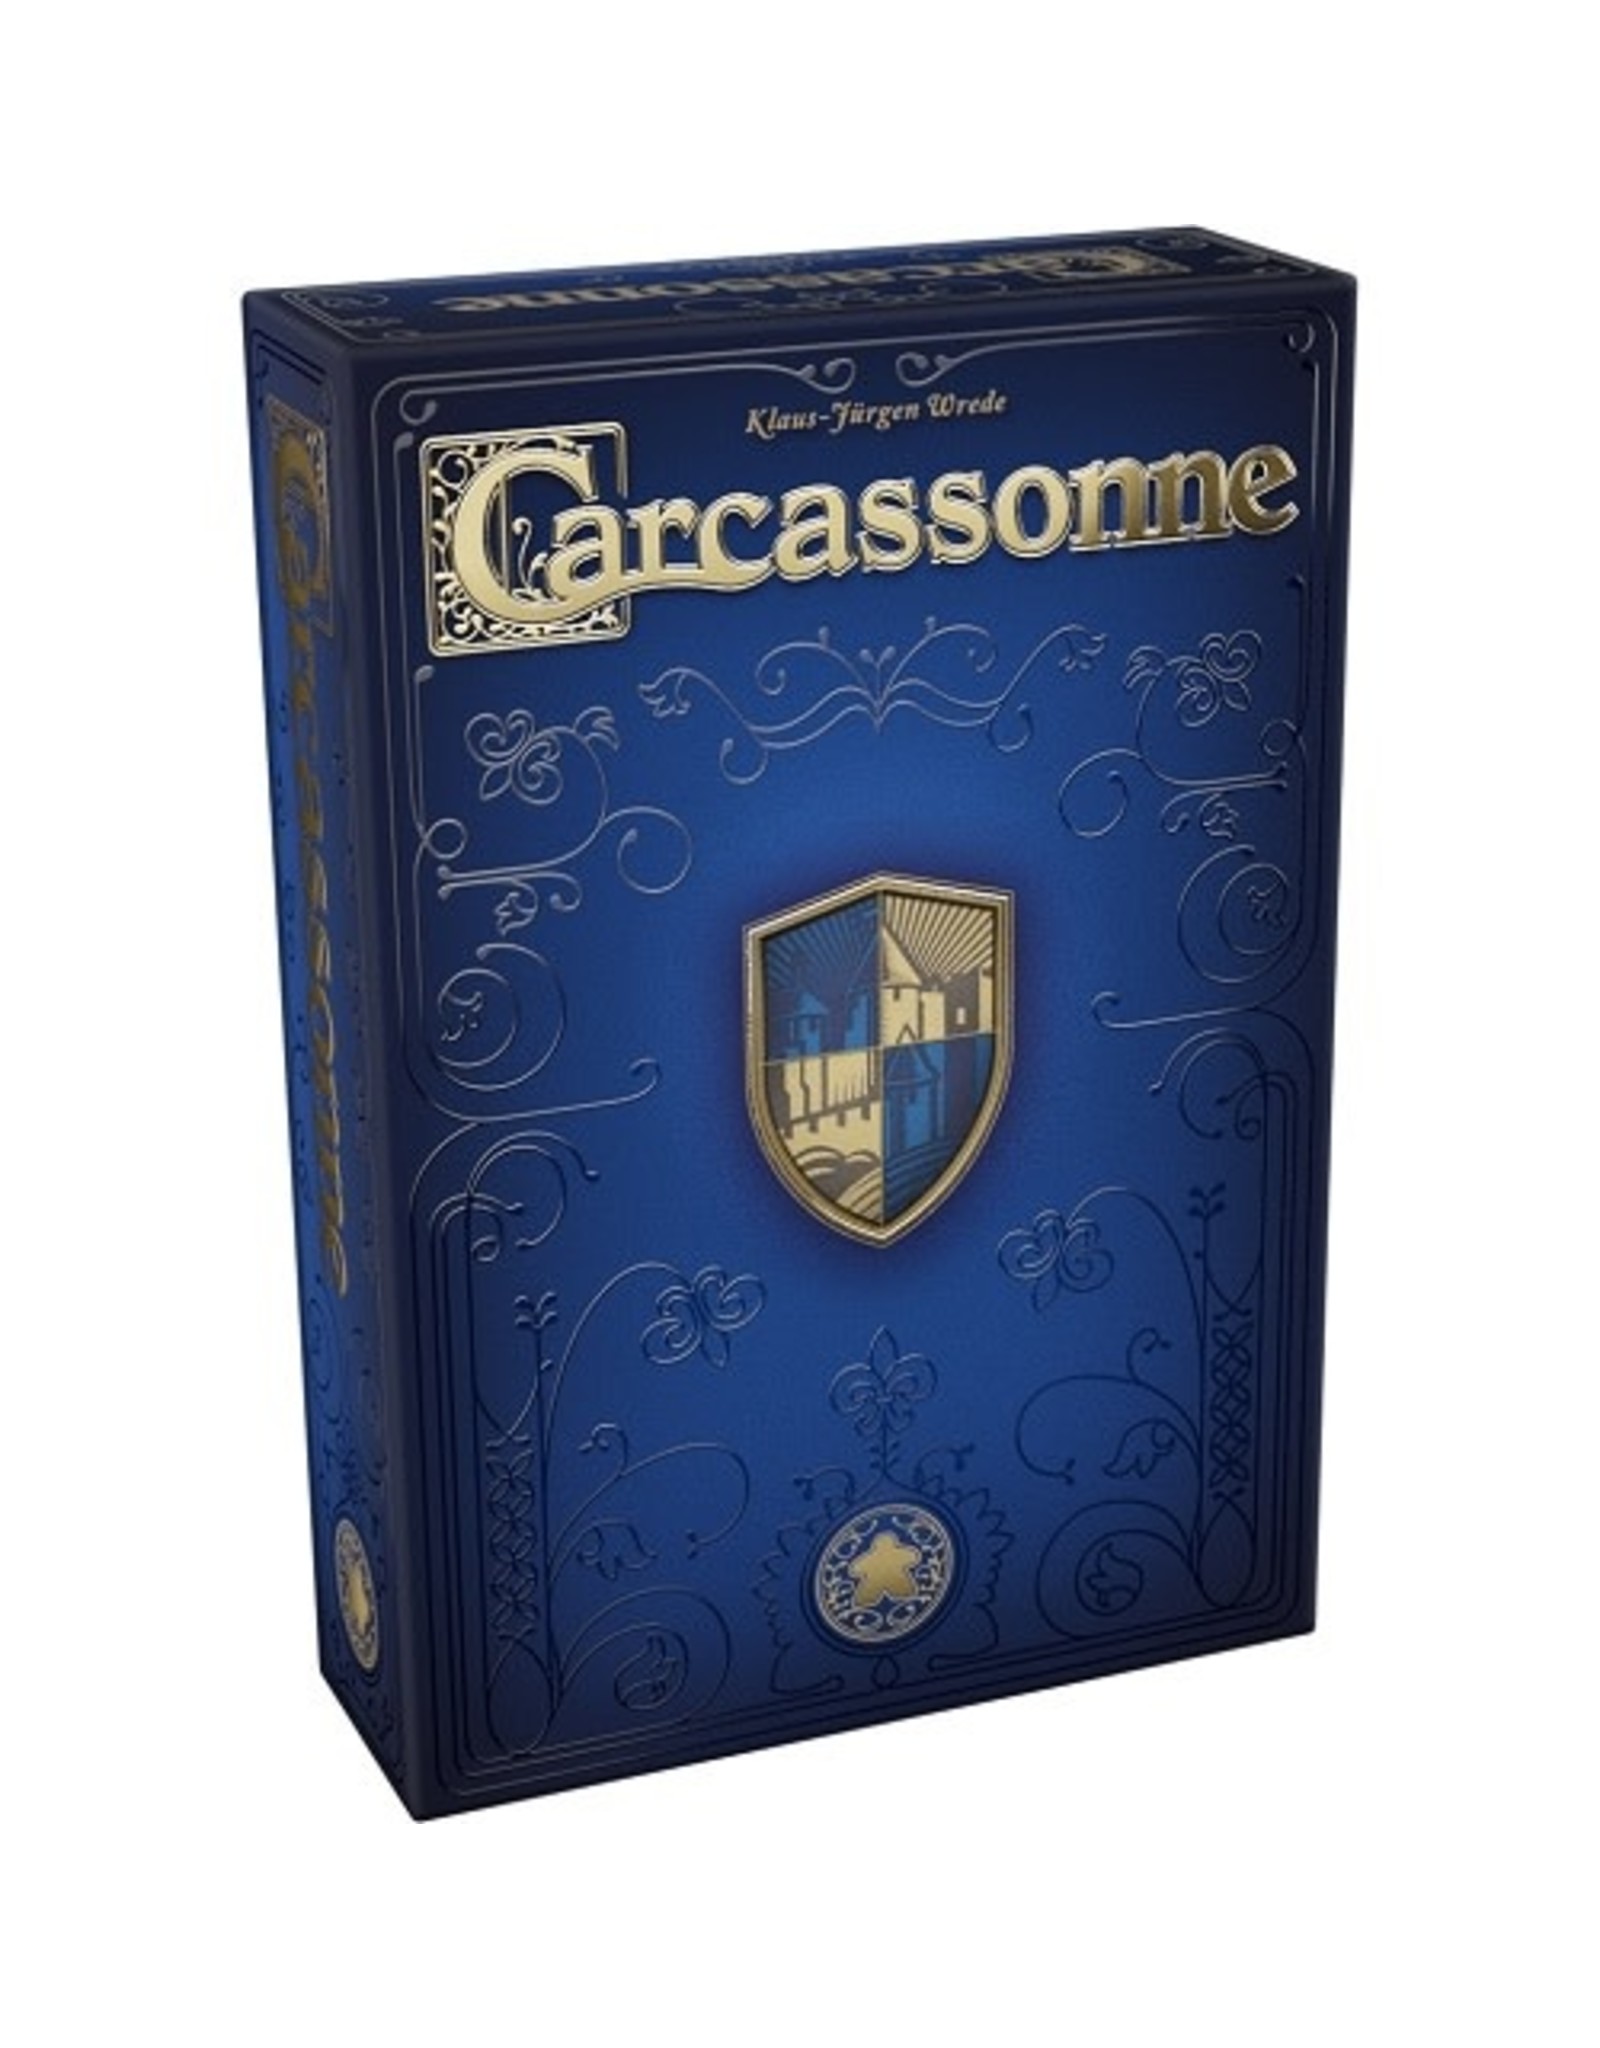 Carcassonne Carcassonne 20th Anniversary